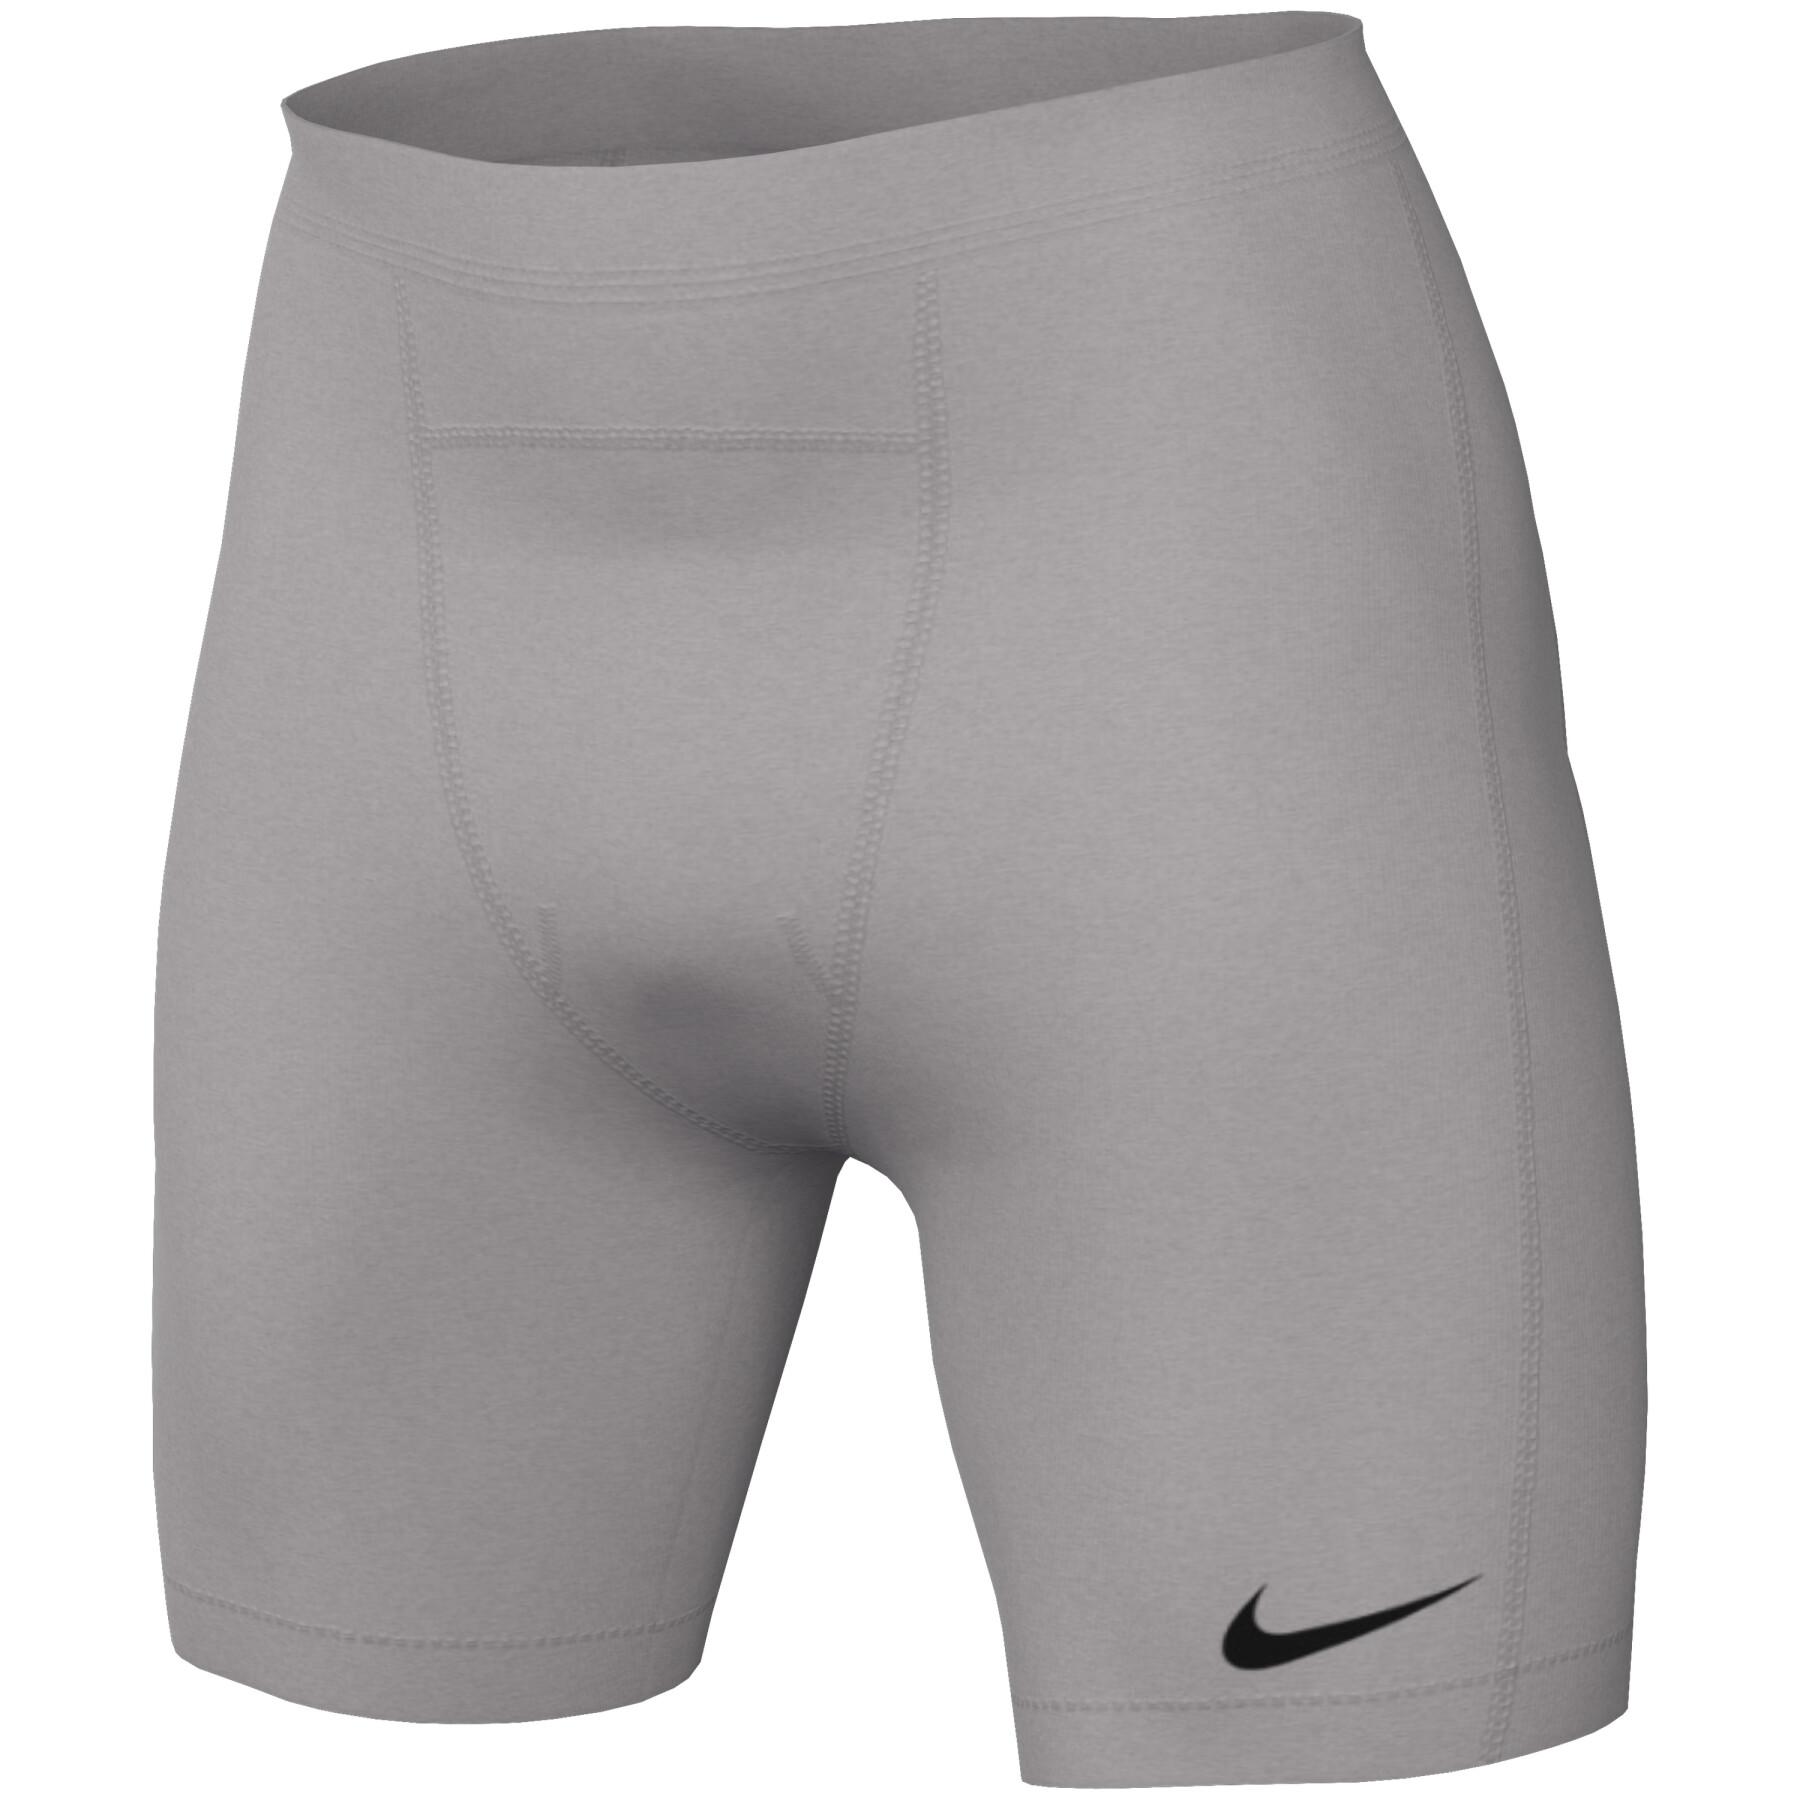 Compression shorts Nike Dri-Fit - Nike - Brands - Handball wear